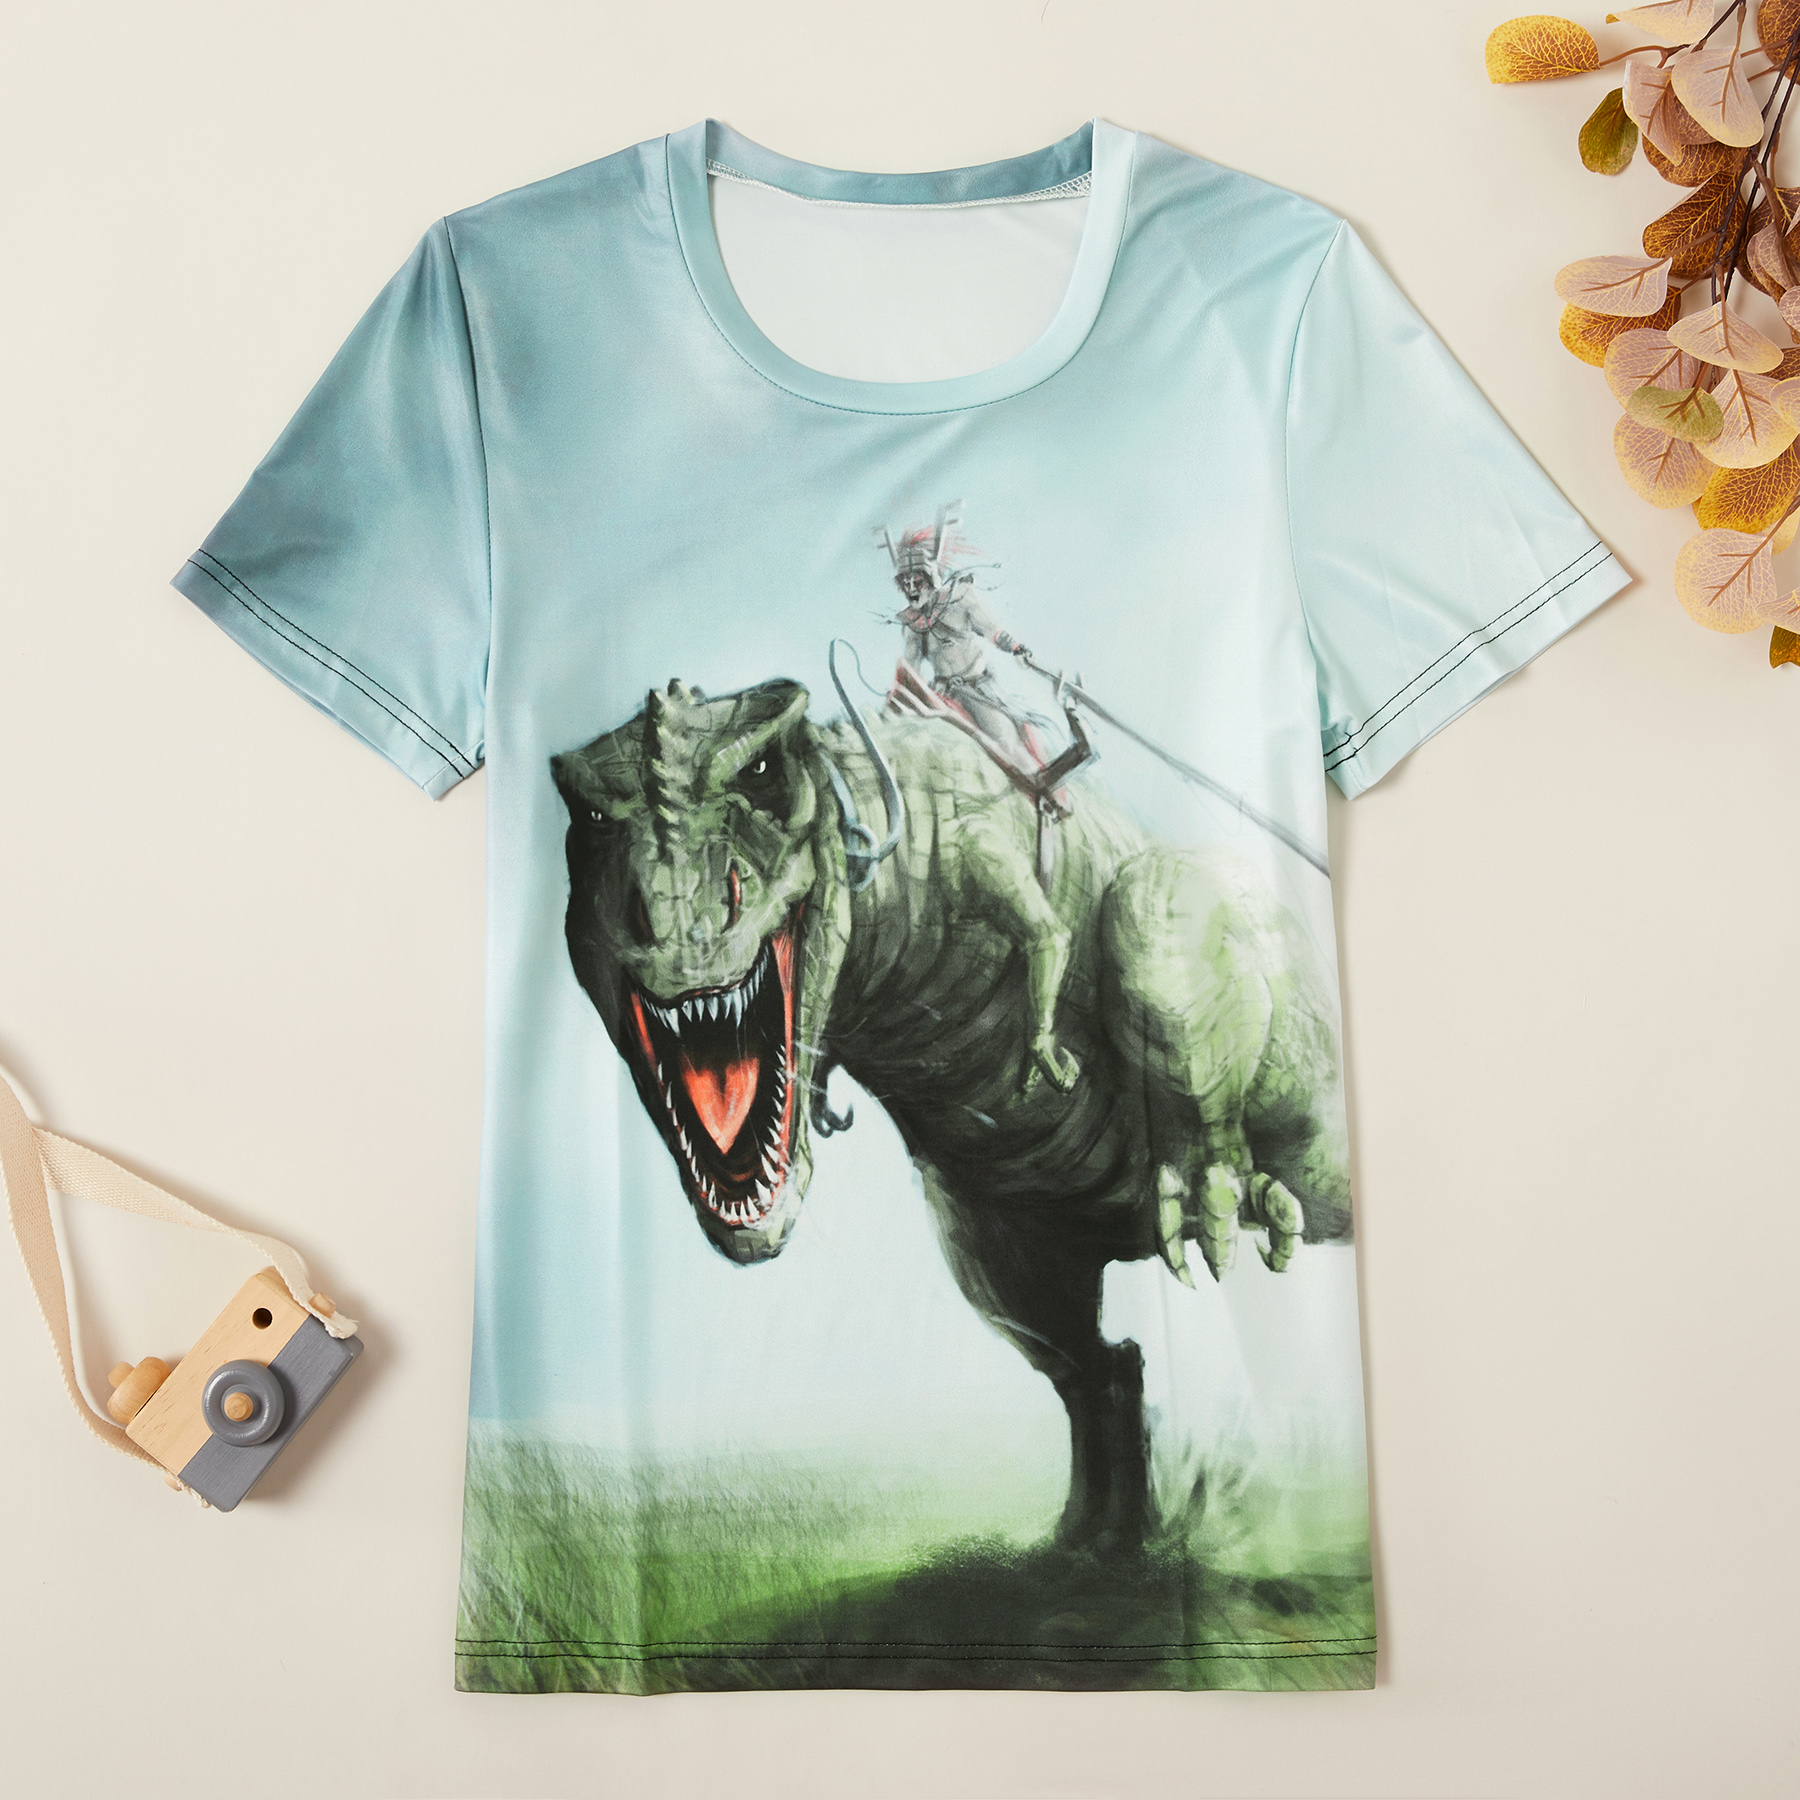 Stylish Dinosaur T-Rex Print Tee